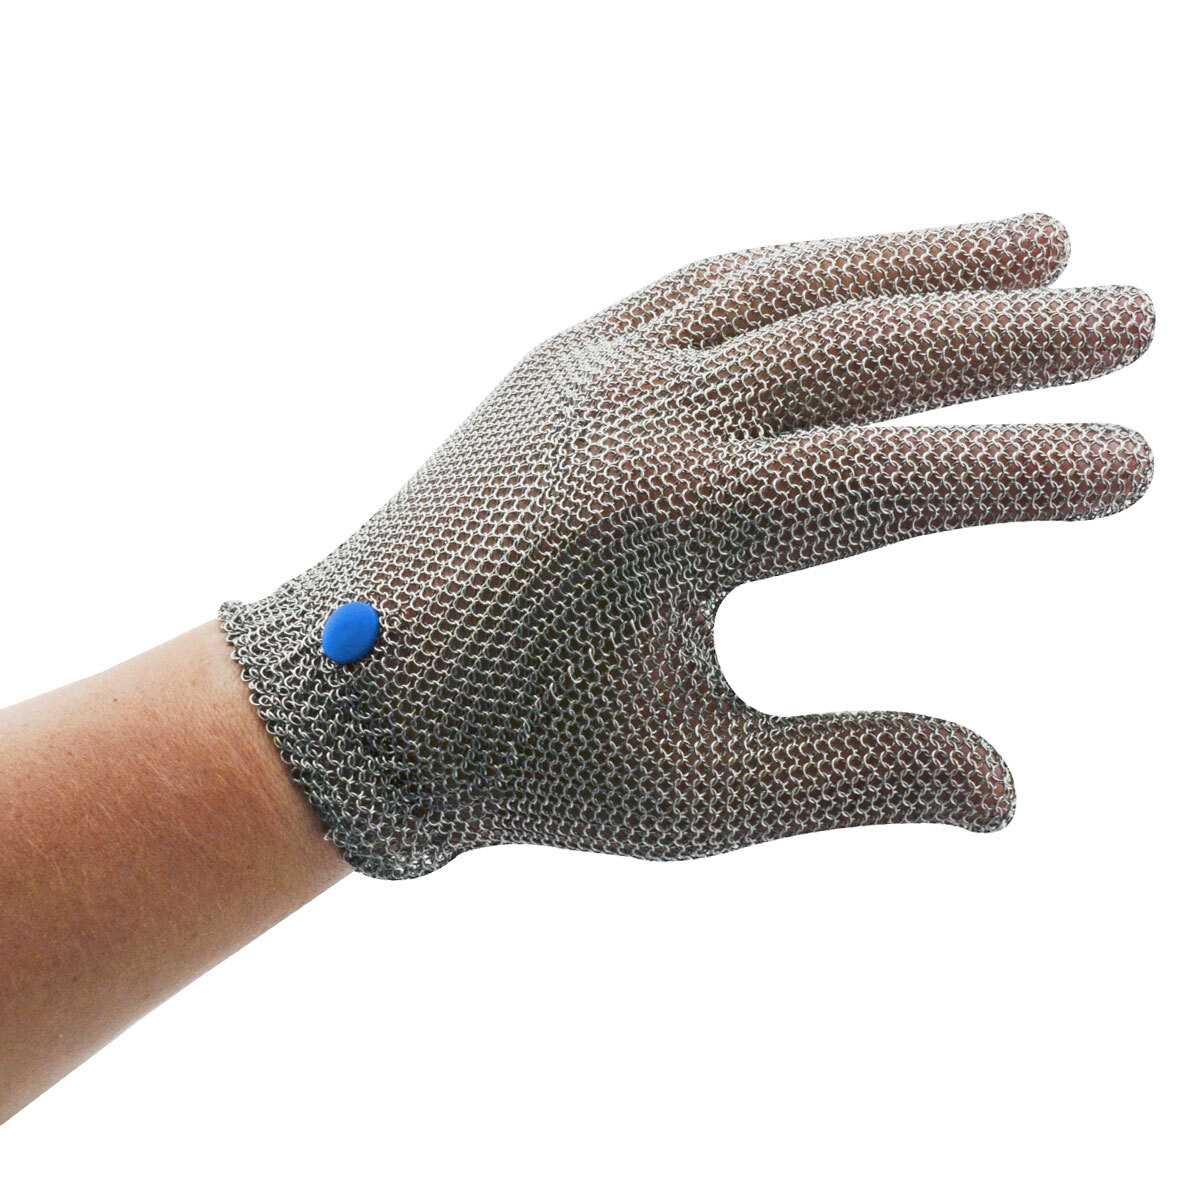 Manulatex Chain Mesh Glove, Wrist Length With Spring